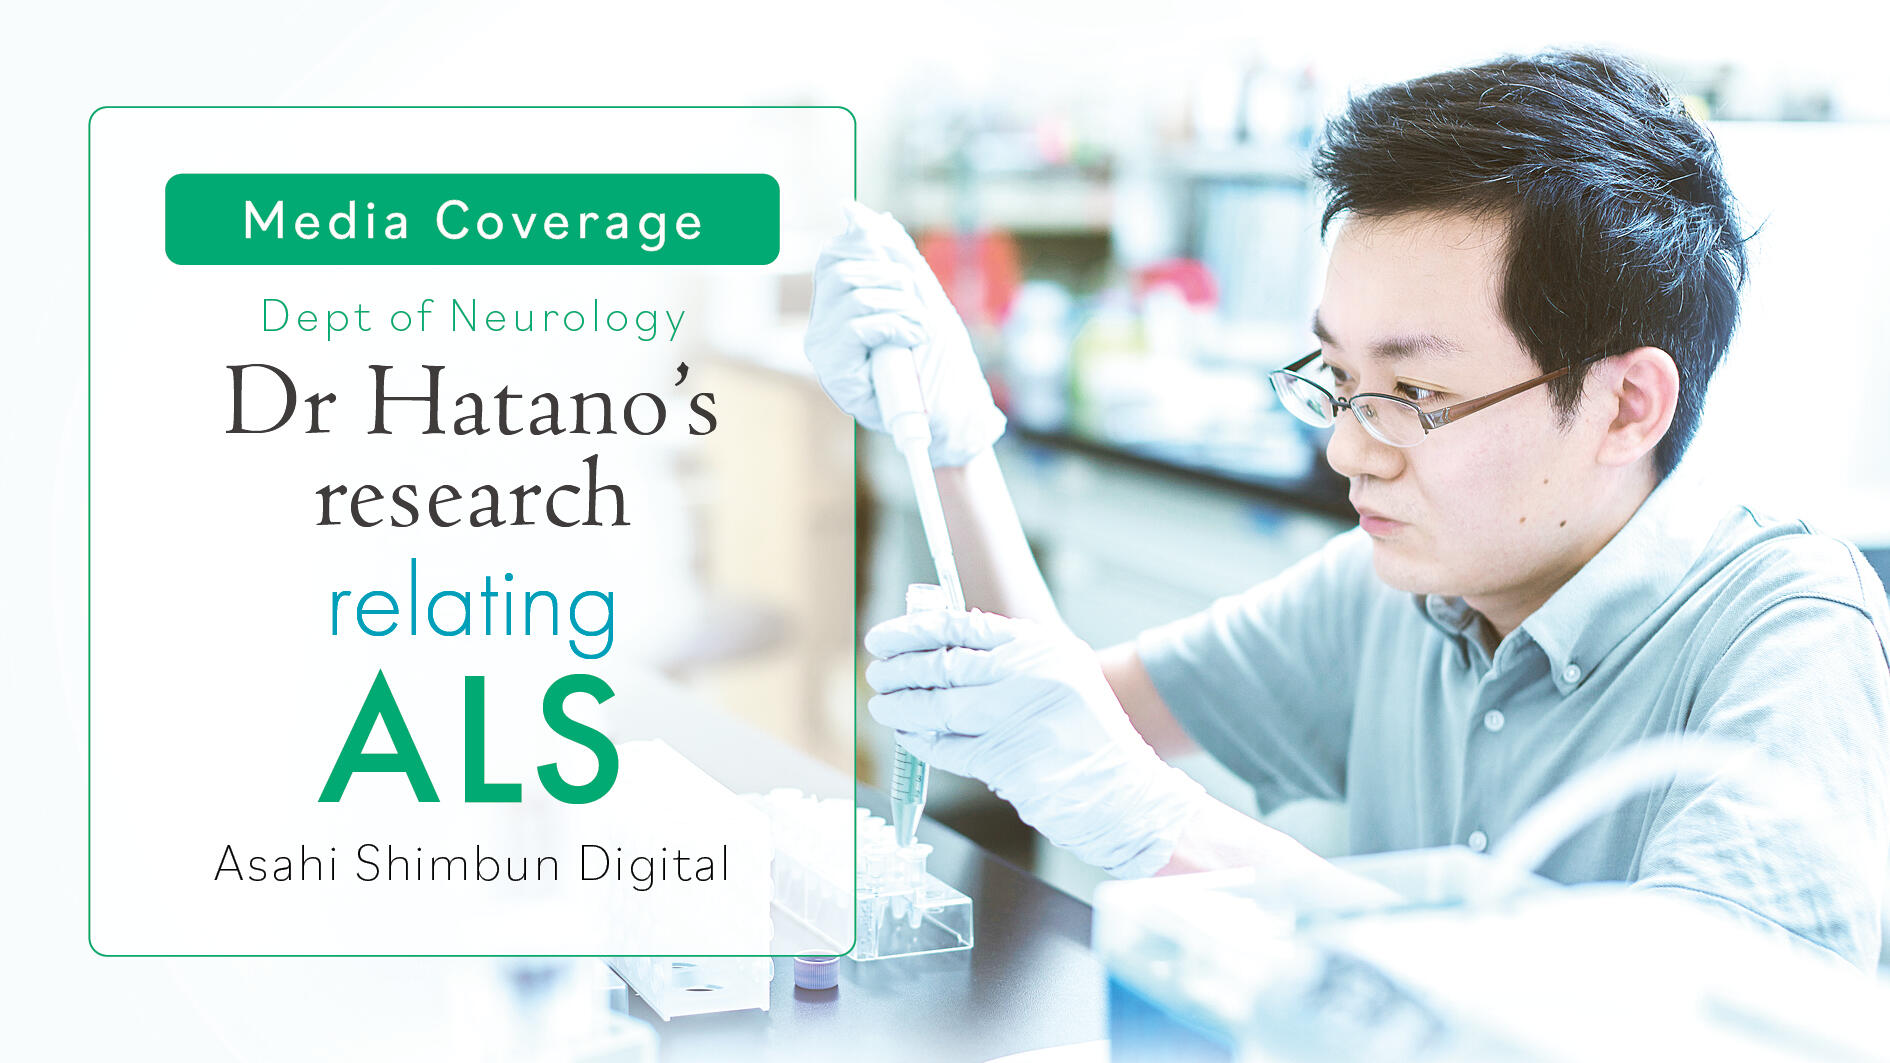 Media Coverage: Dr Hatano's research relating ALS - Asahi Shimbun Digital